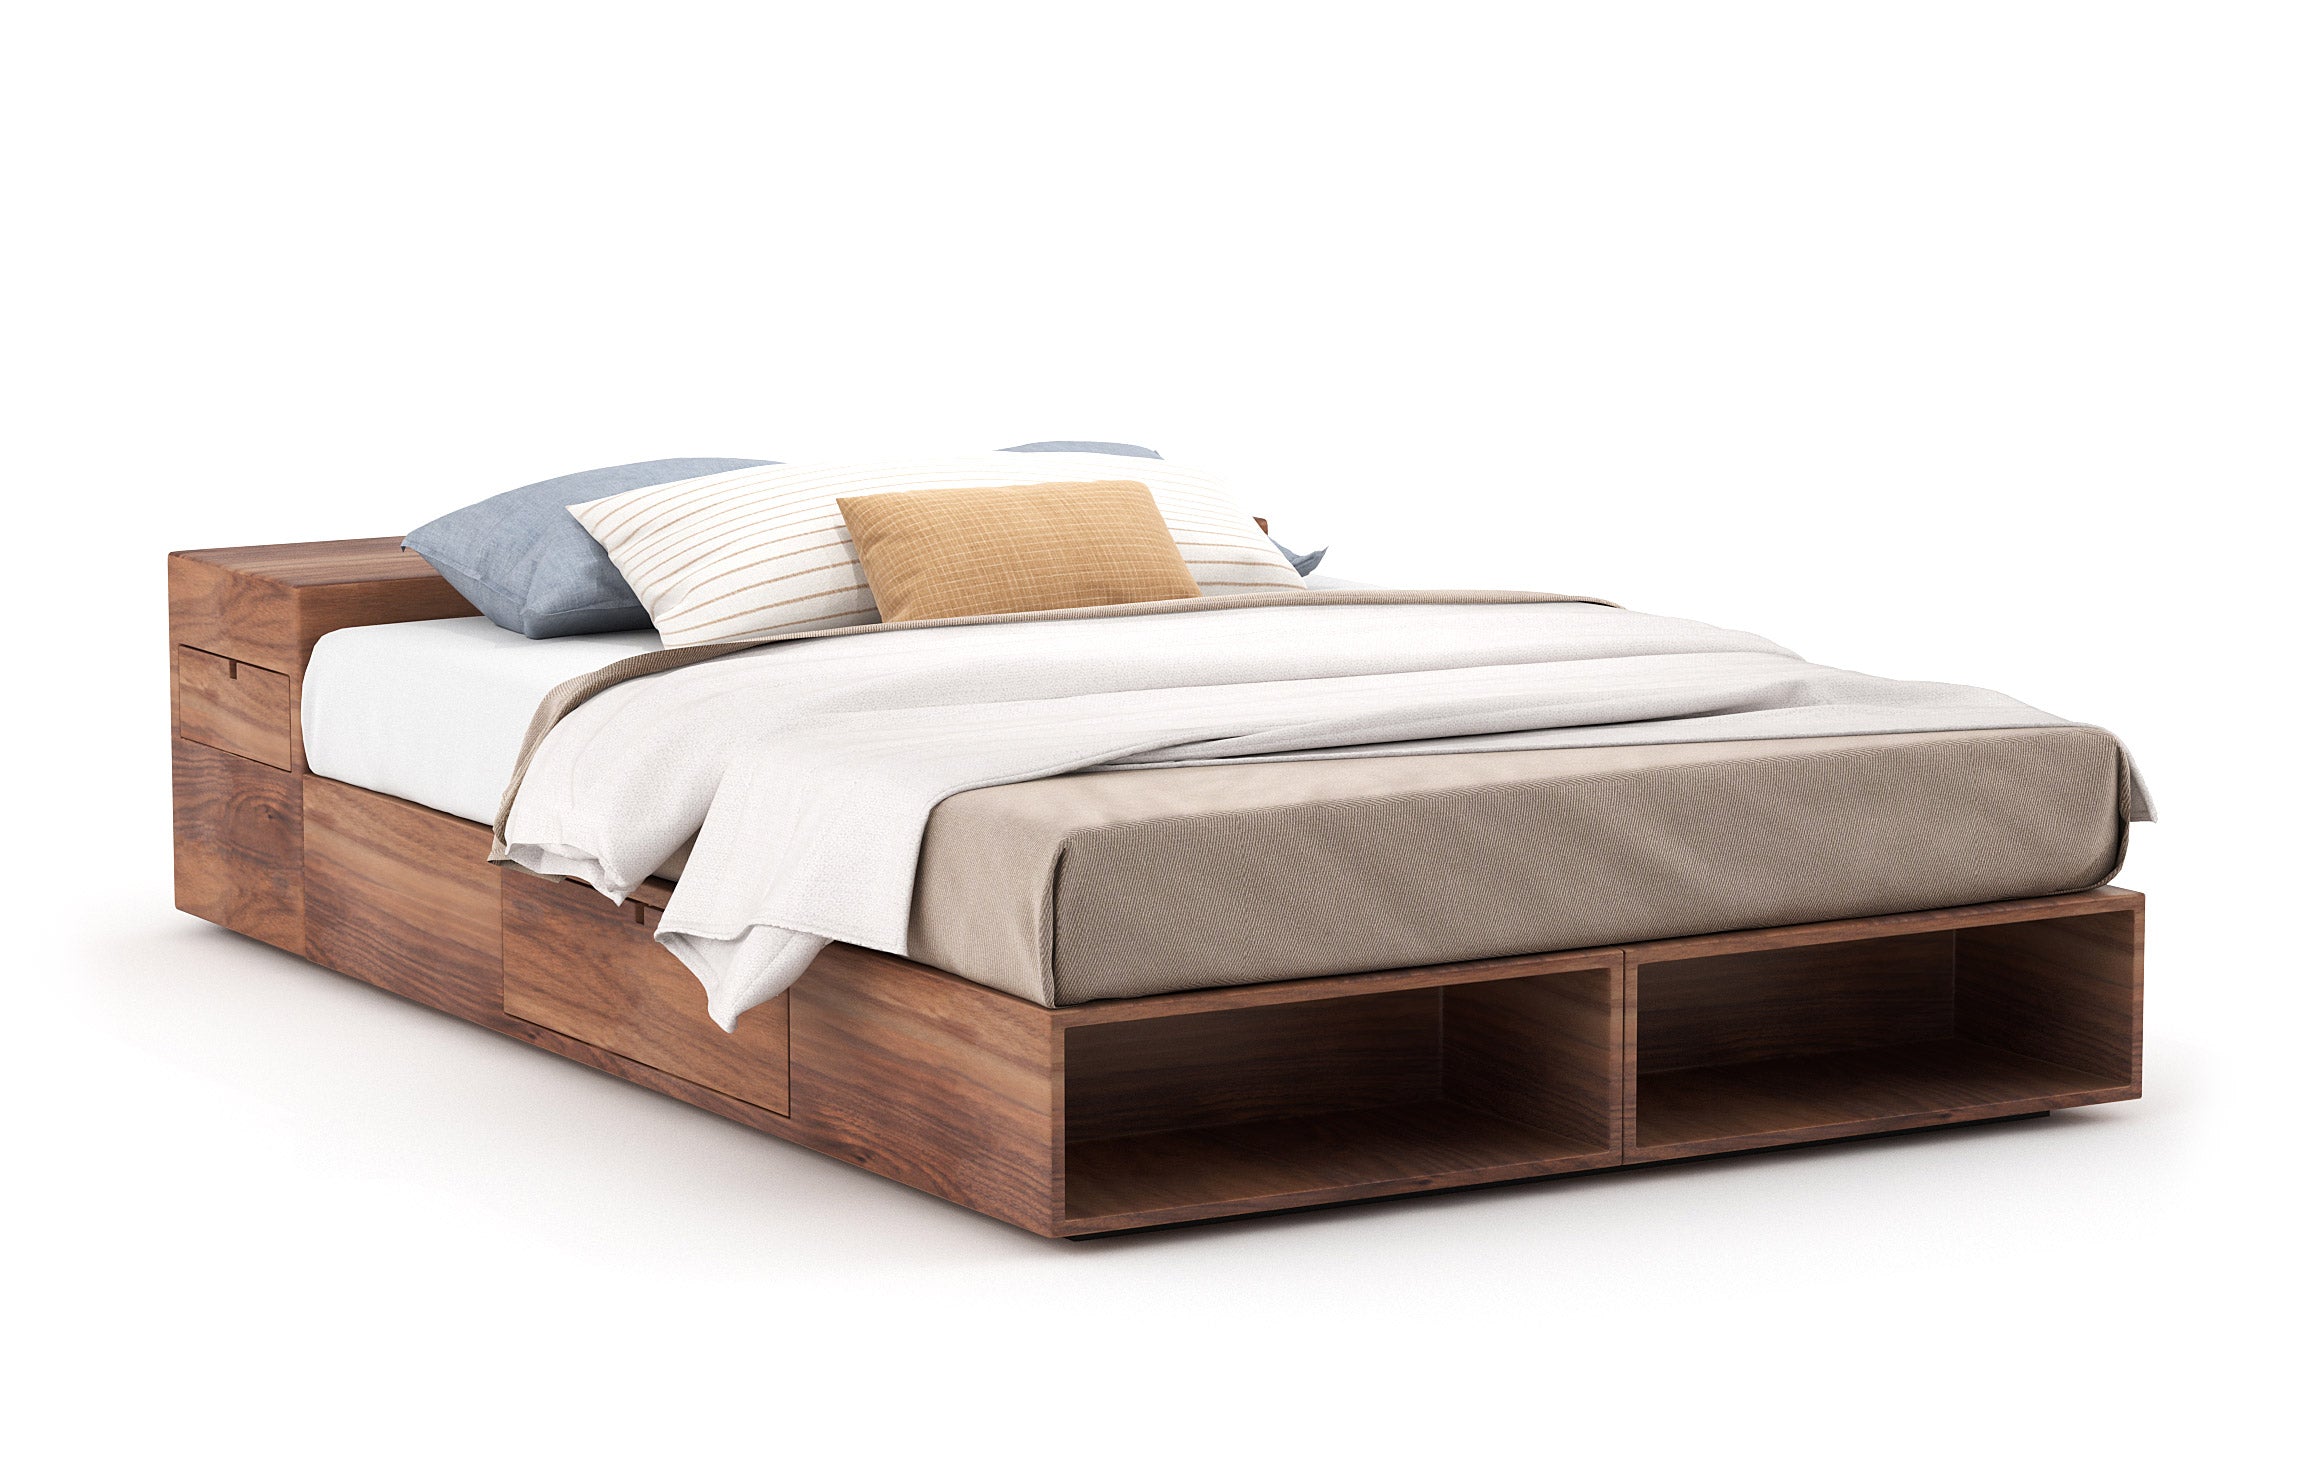 Buden Queen Bed in walnut wood with low headboard